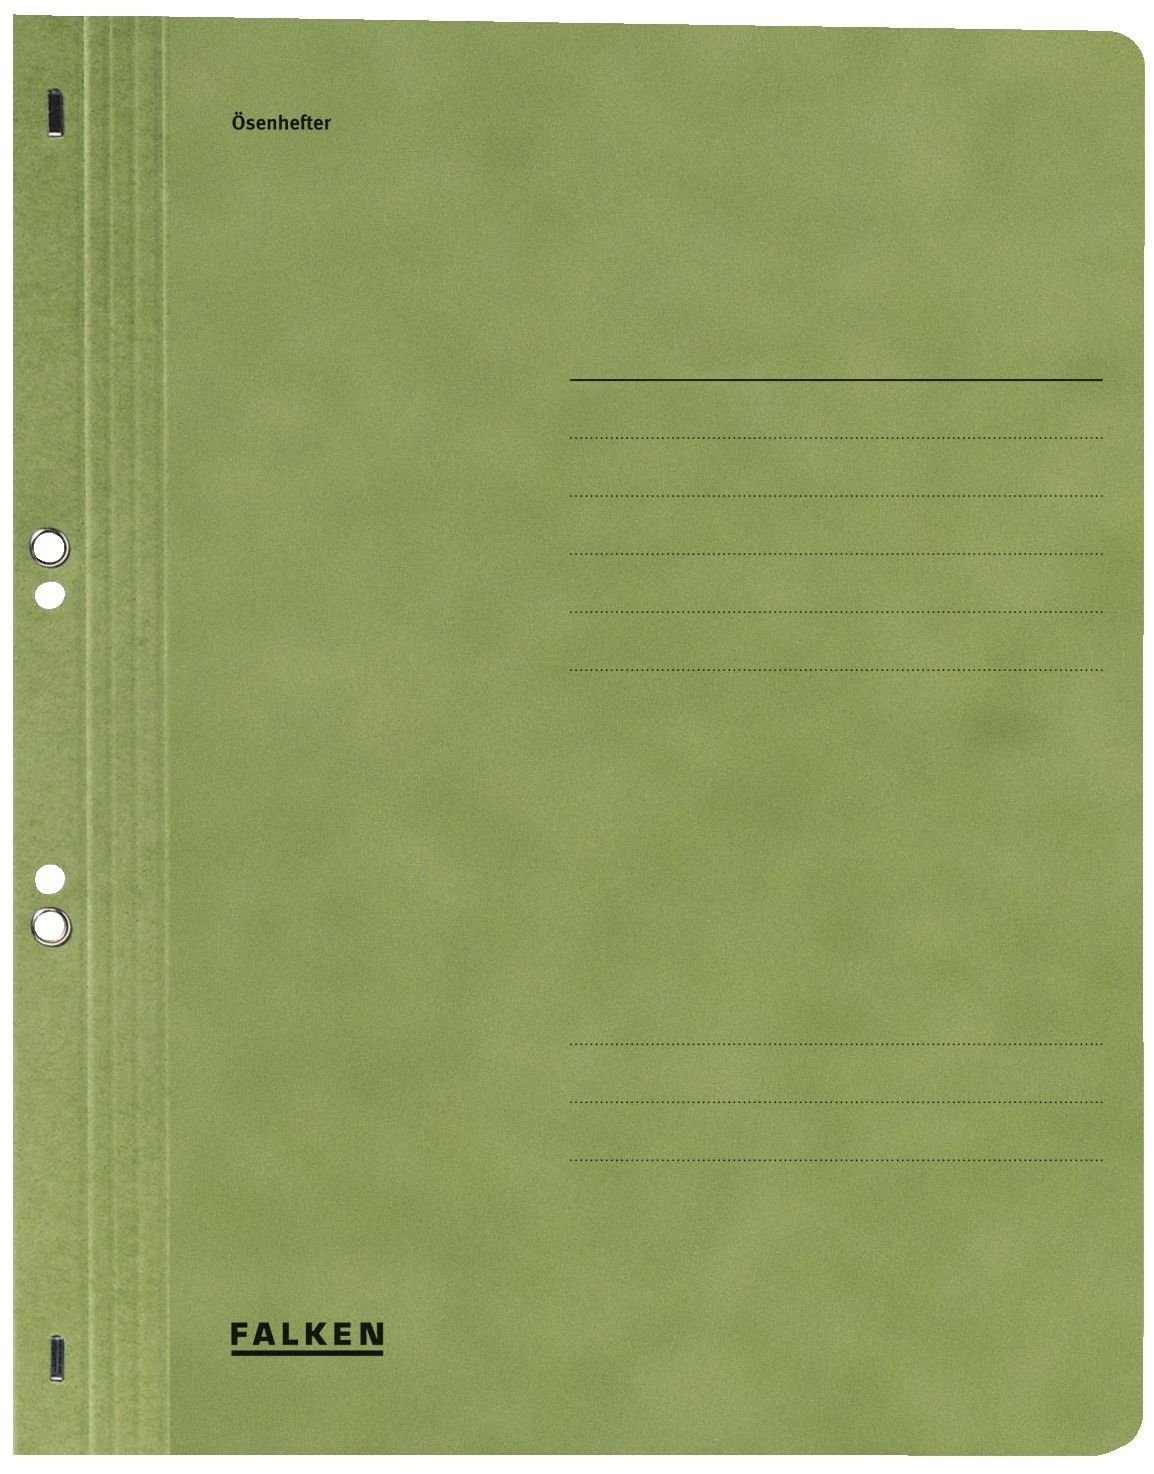 Falken Hefter Ösenhefter - A4 1/1 Vorderdeckel, grün, Manilakarton, 250 g/qm